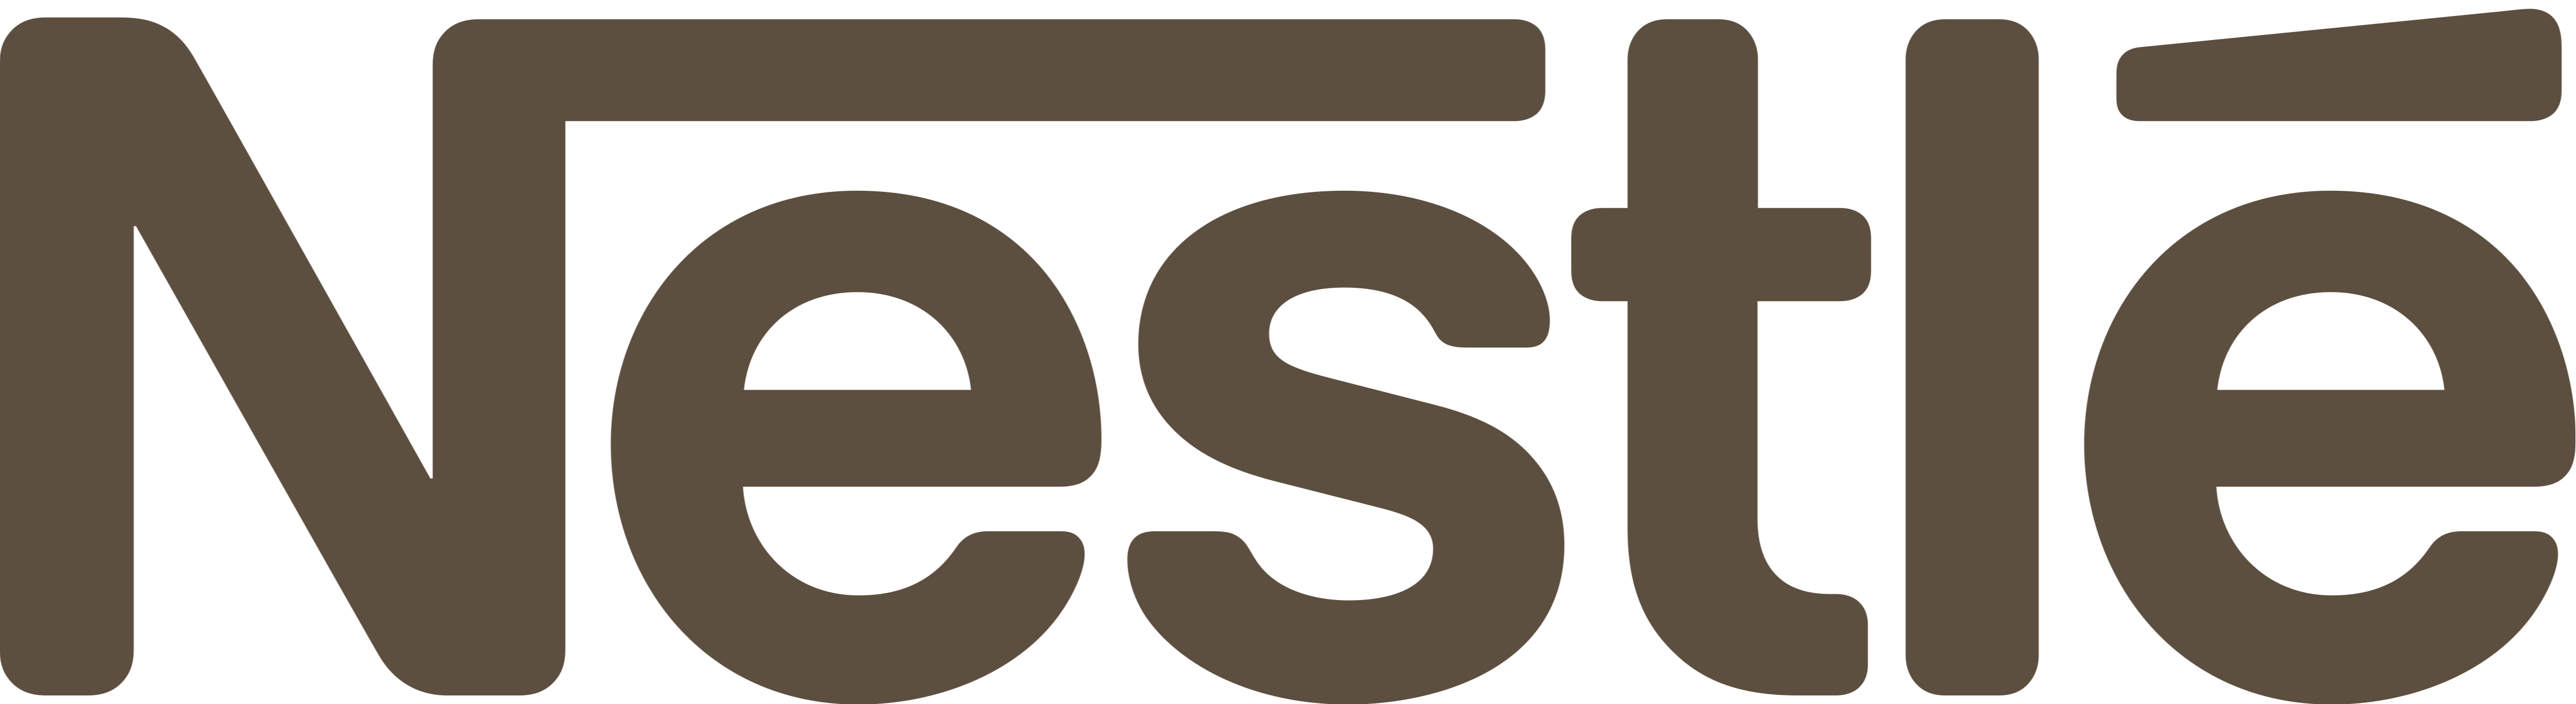 Nestle_Logo-1